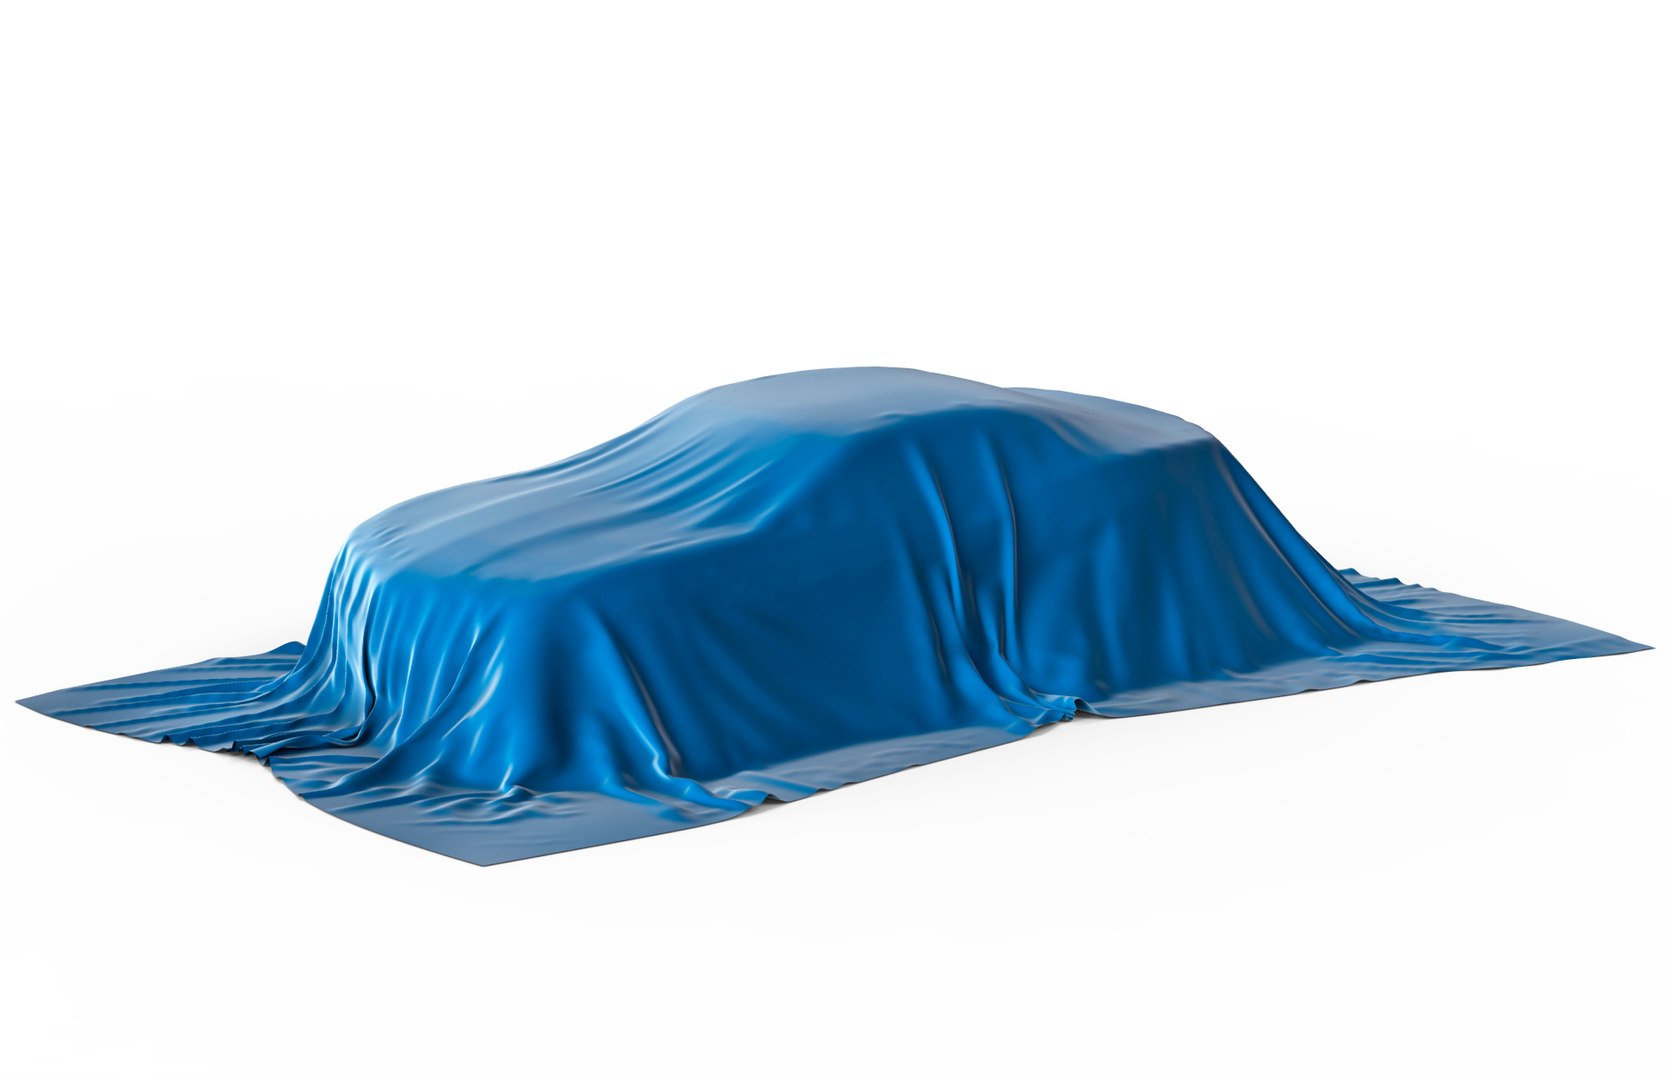 Car covered cloth 3D model - TurboSquid 1493065